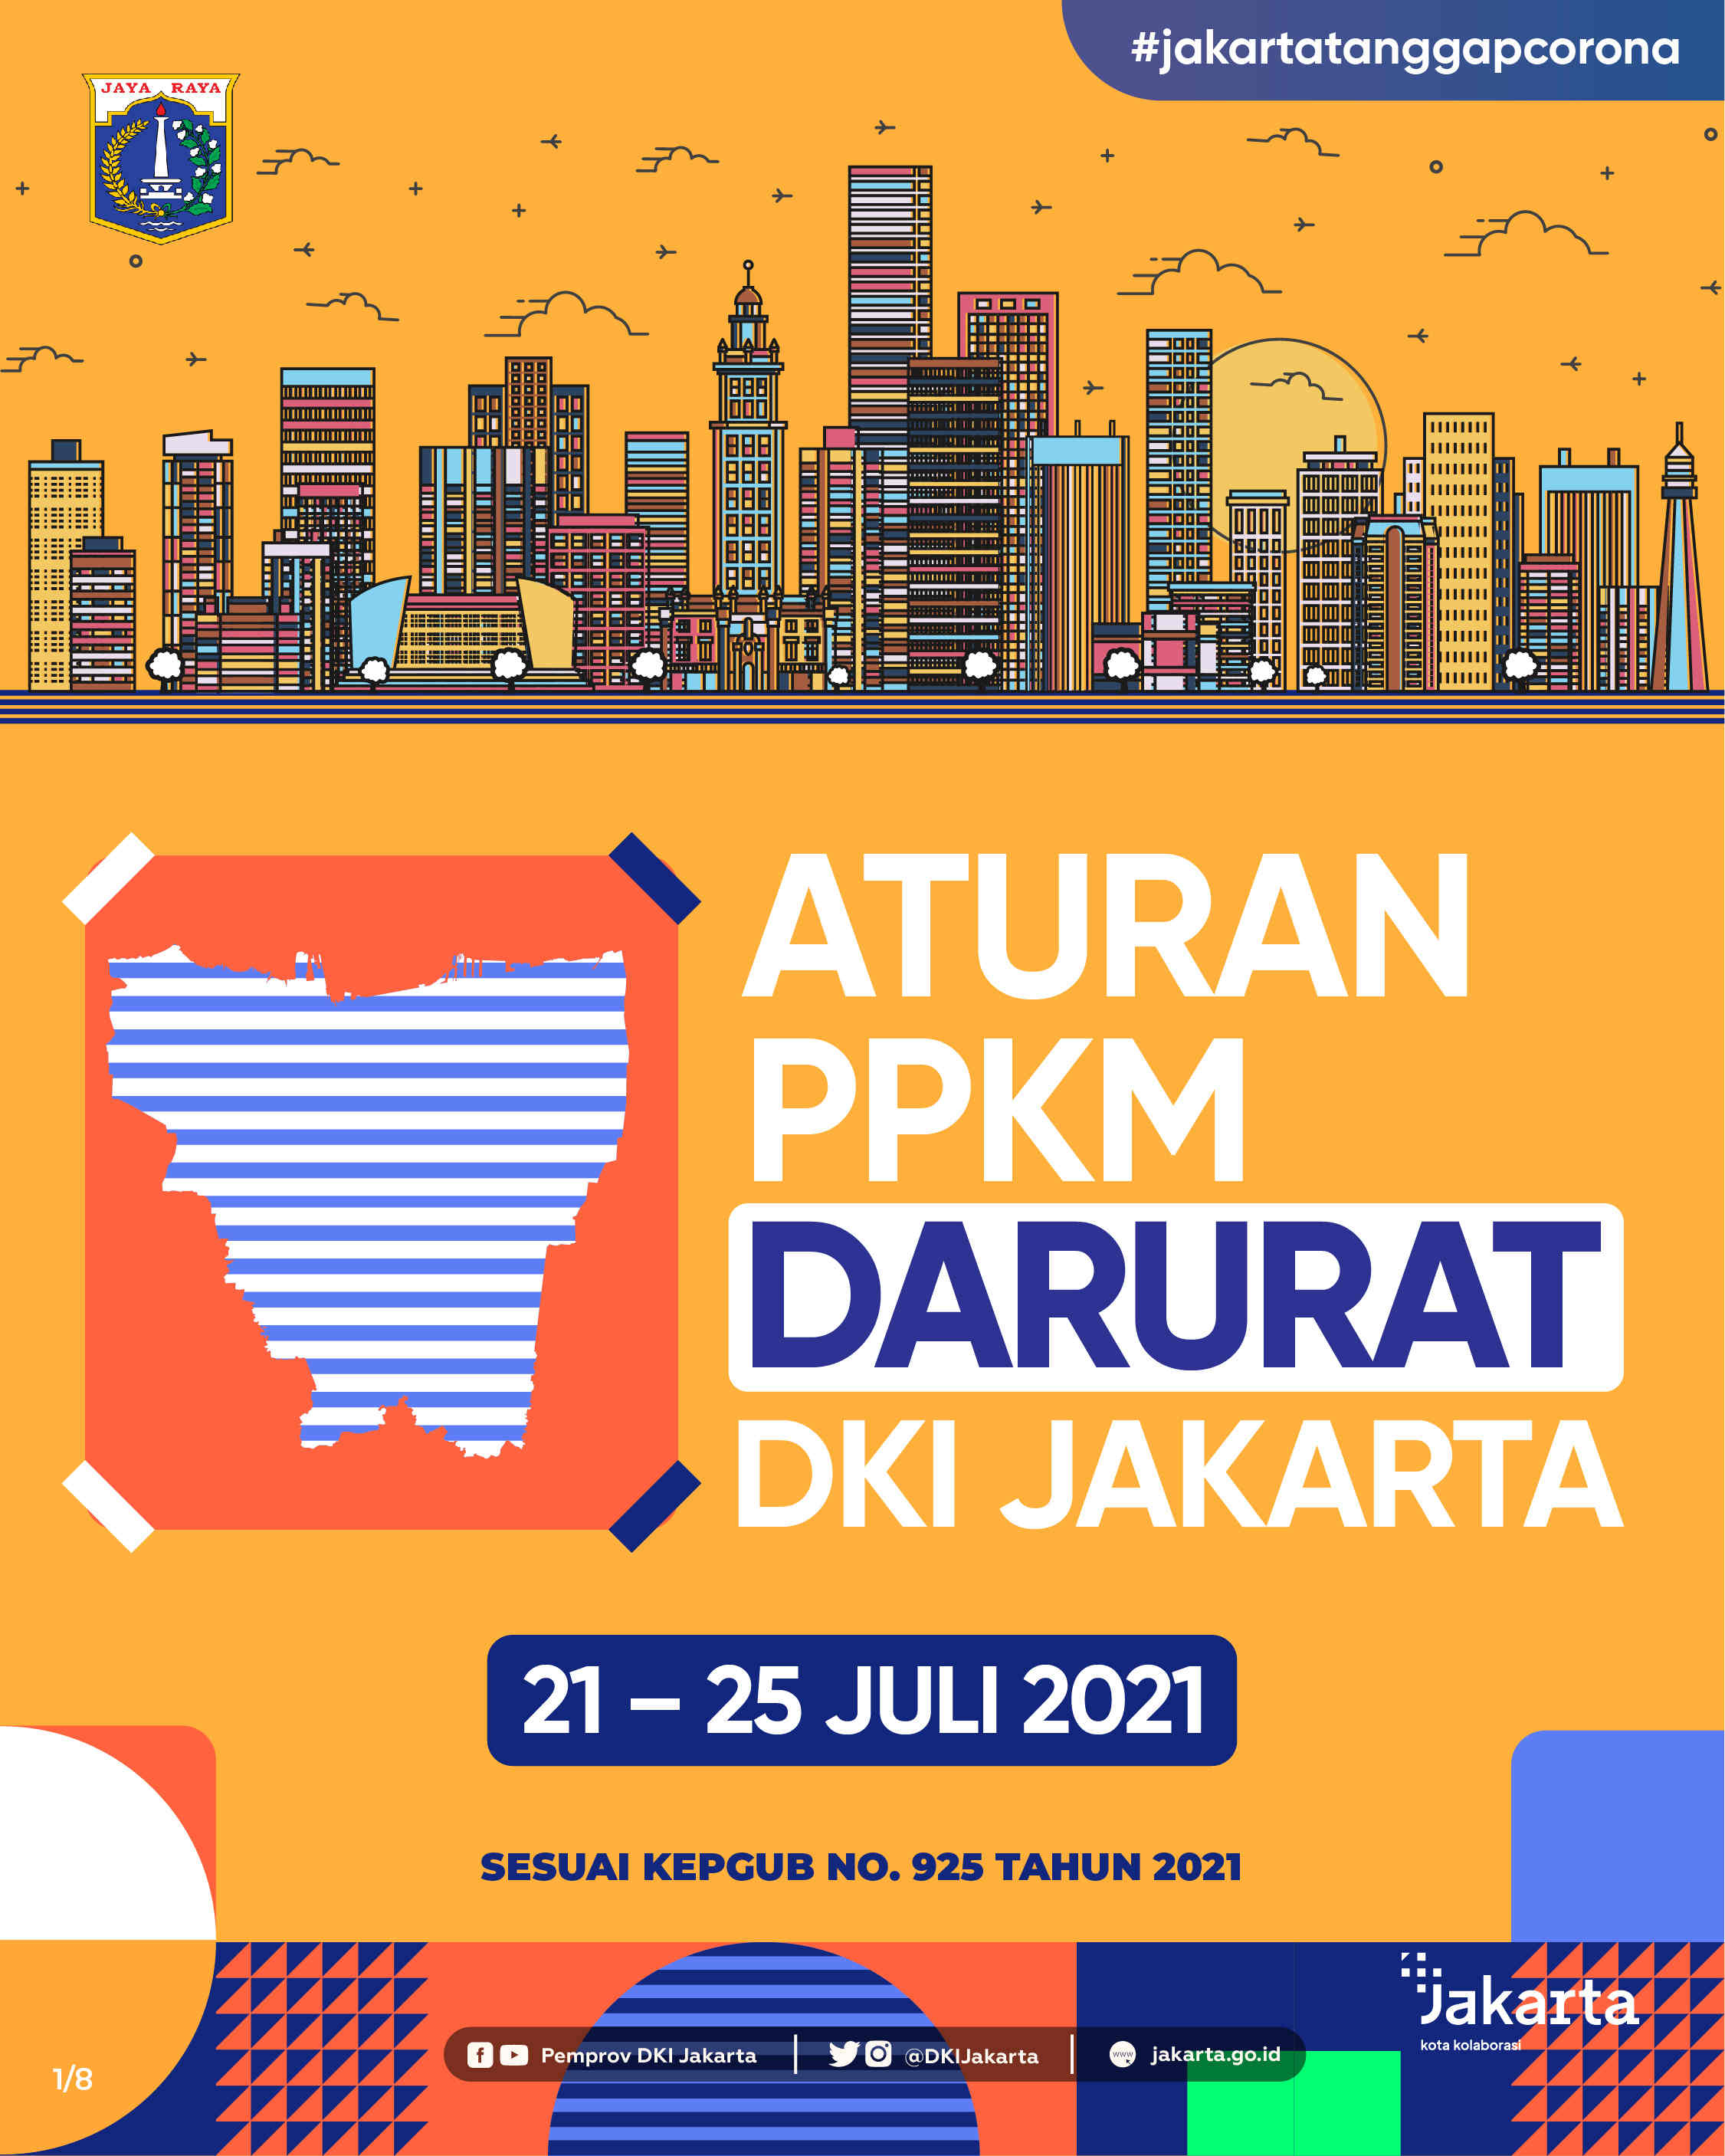 Emergency PPKM Regulations in DKI Jakarta for 21-25 July 2021